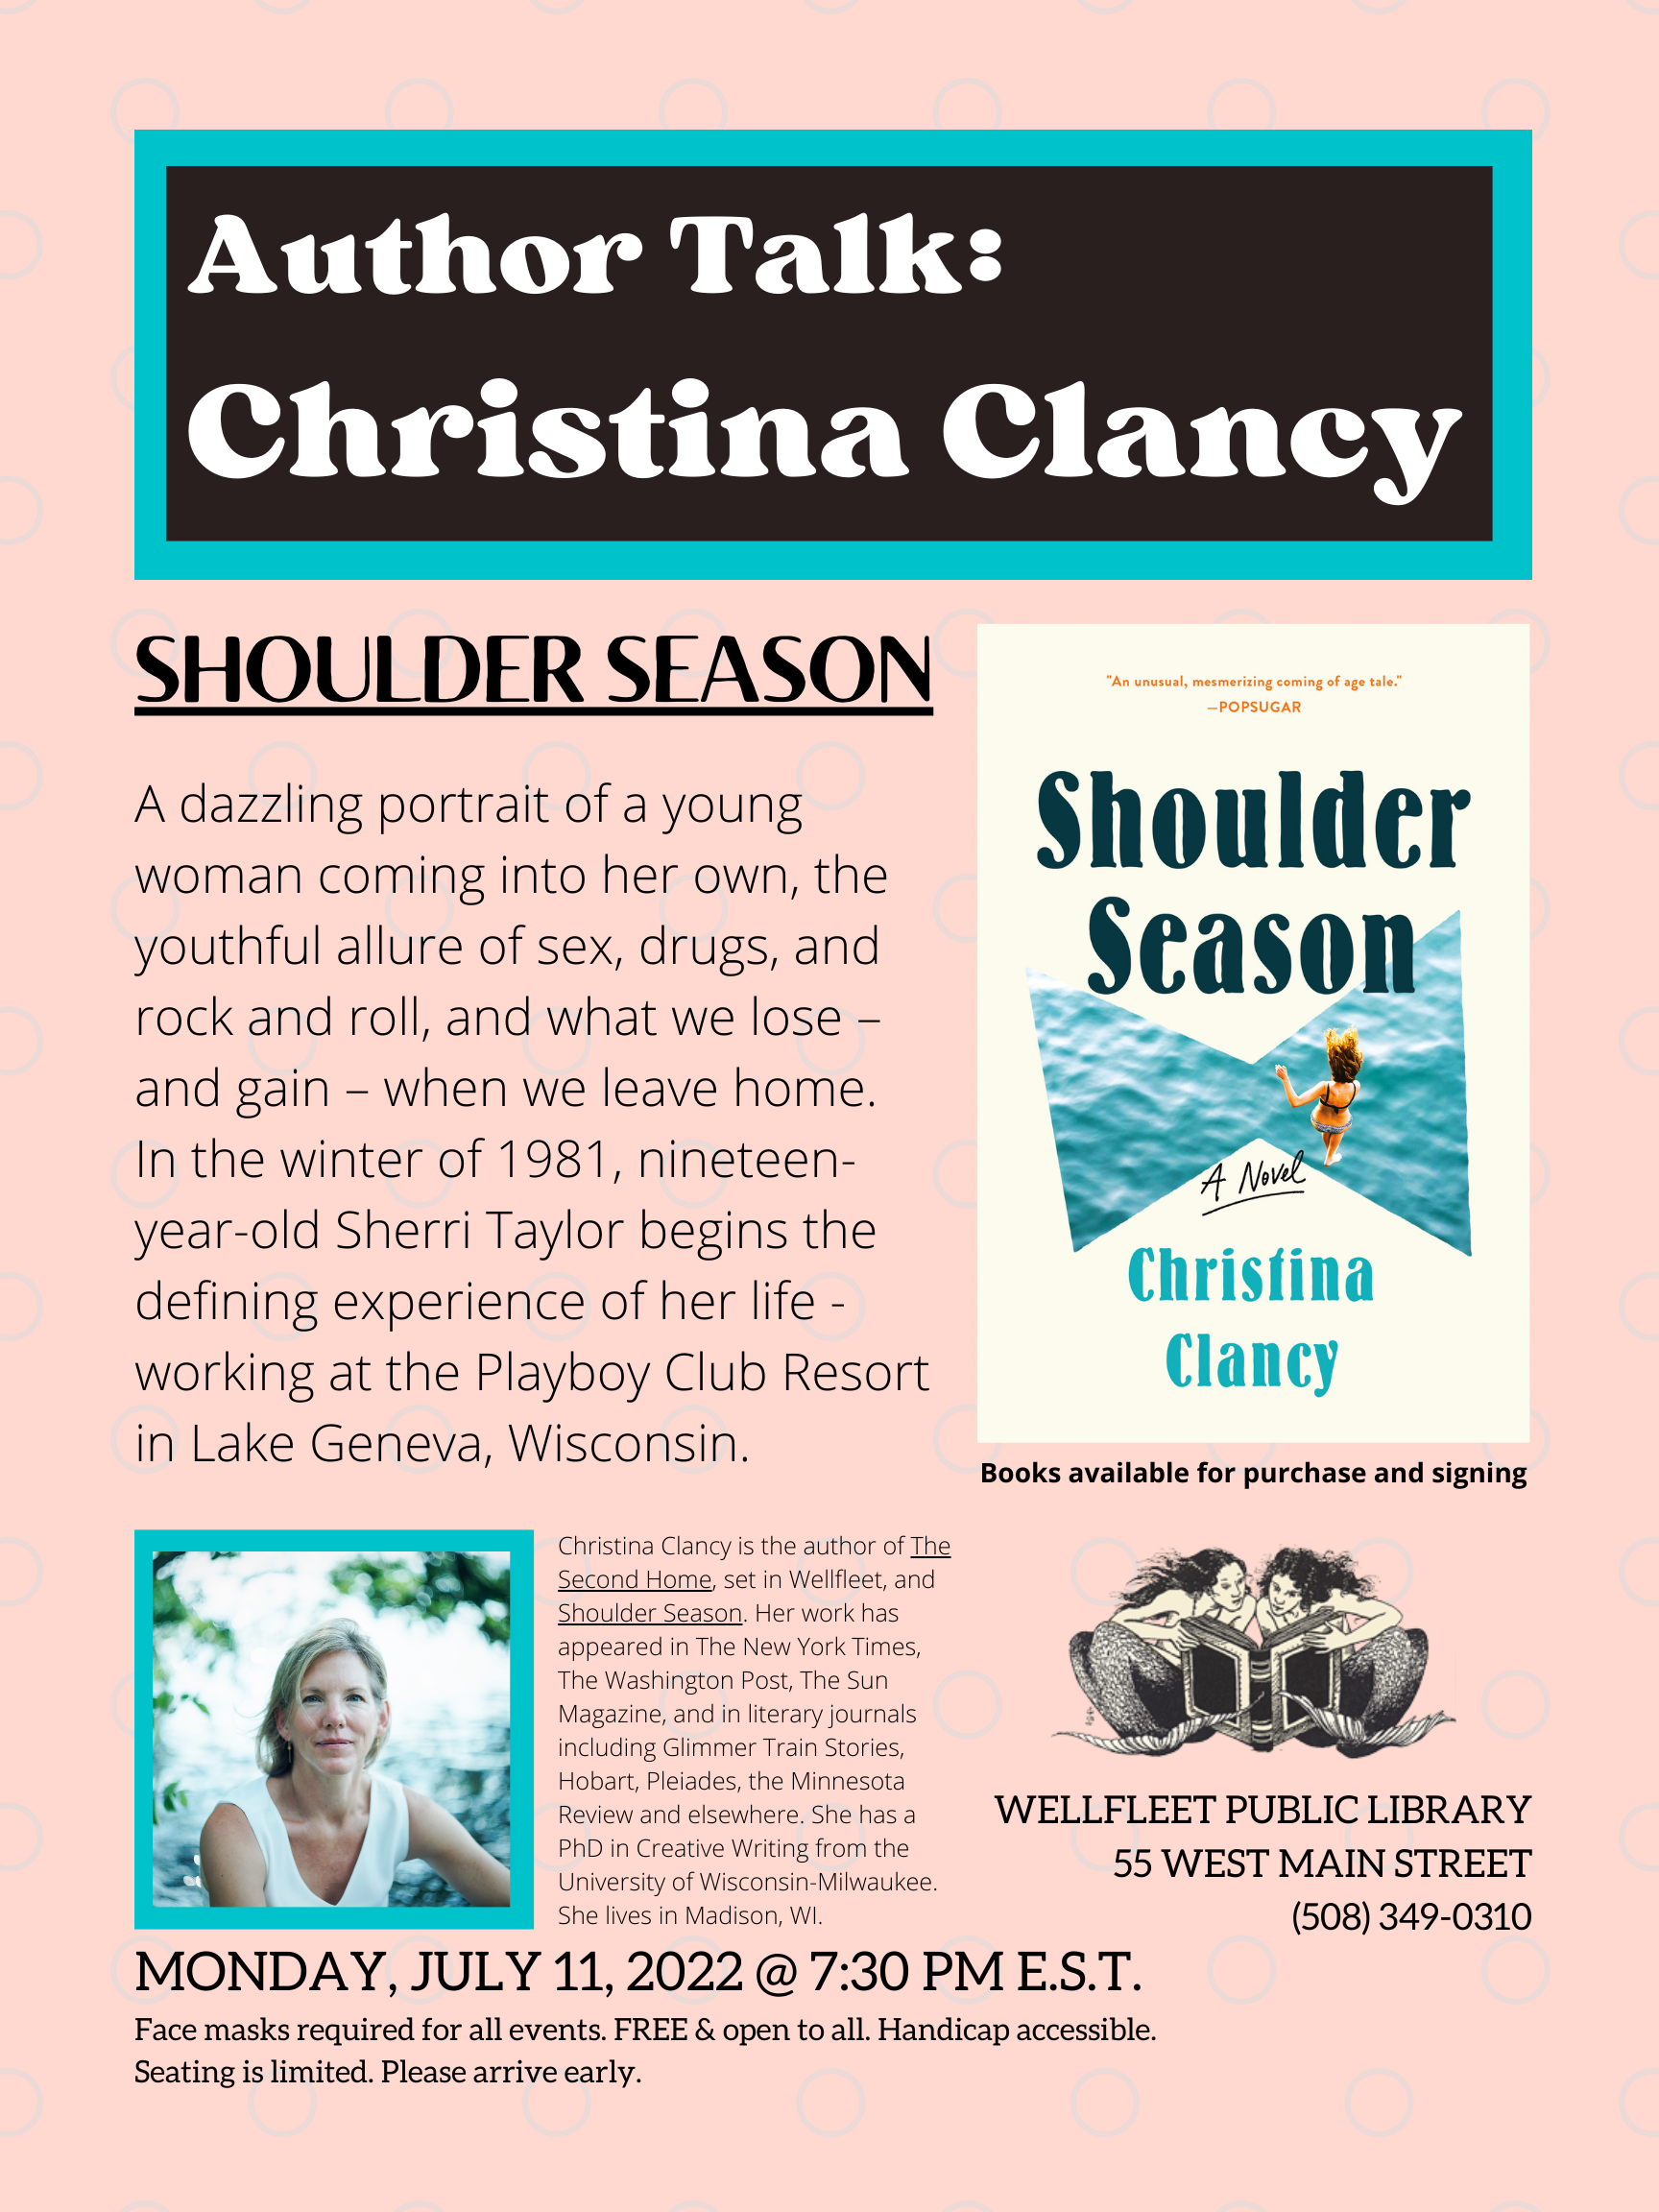 Author Talk Christina Clancy — Wellfleet Public Library